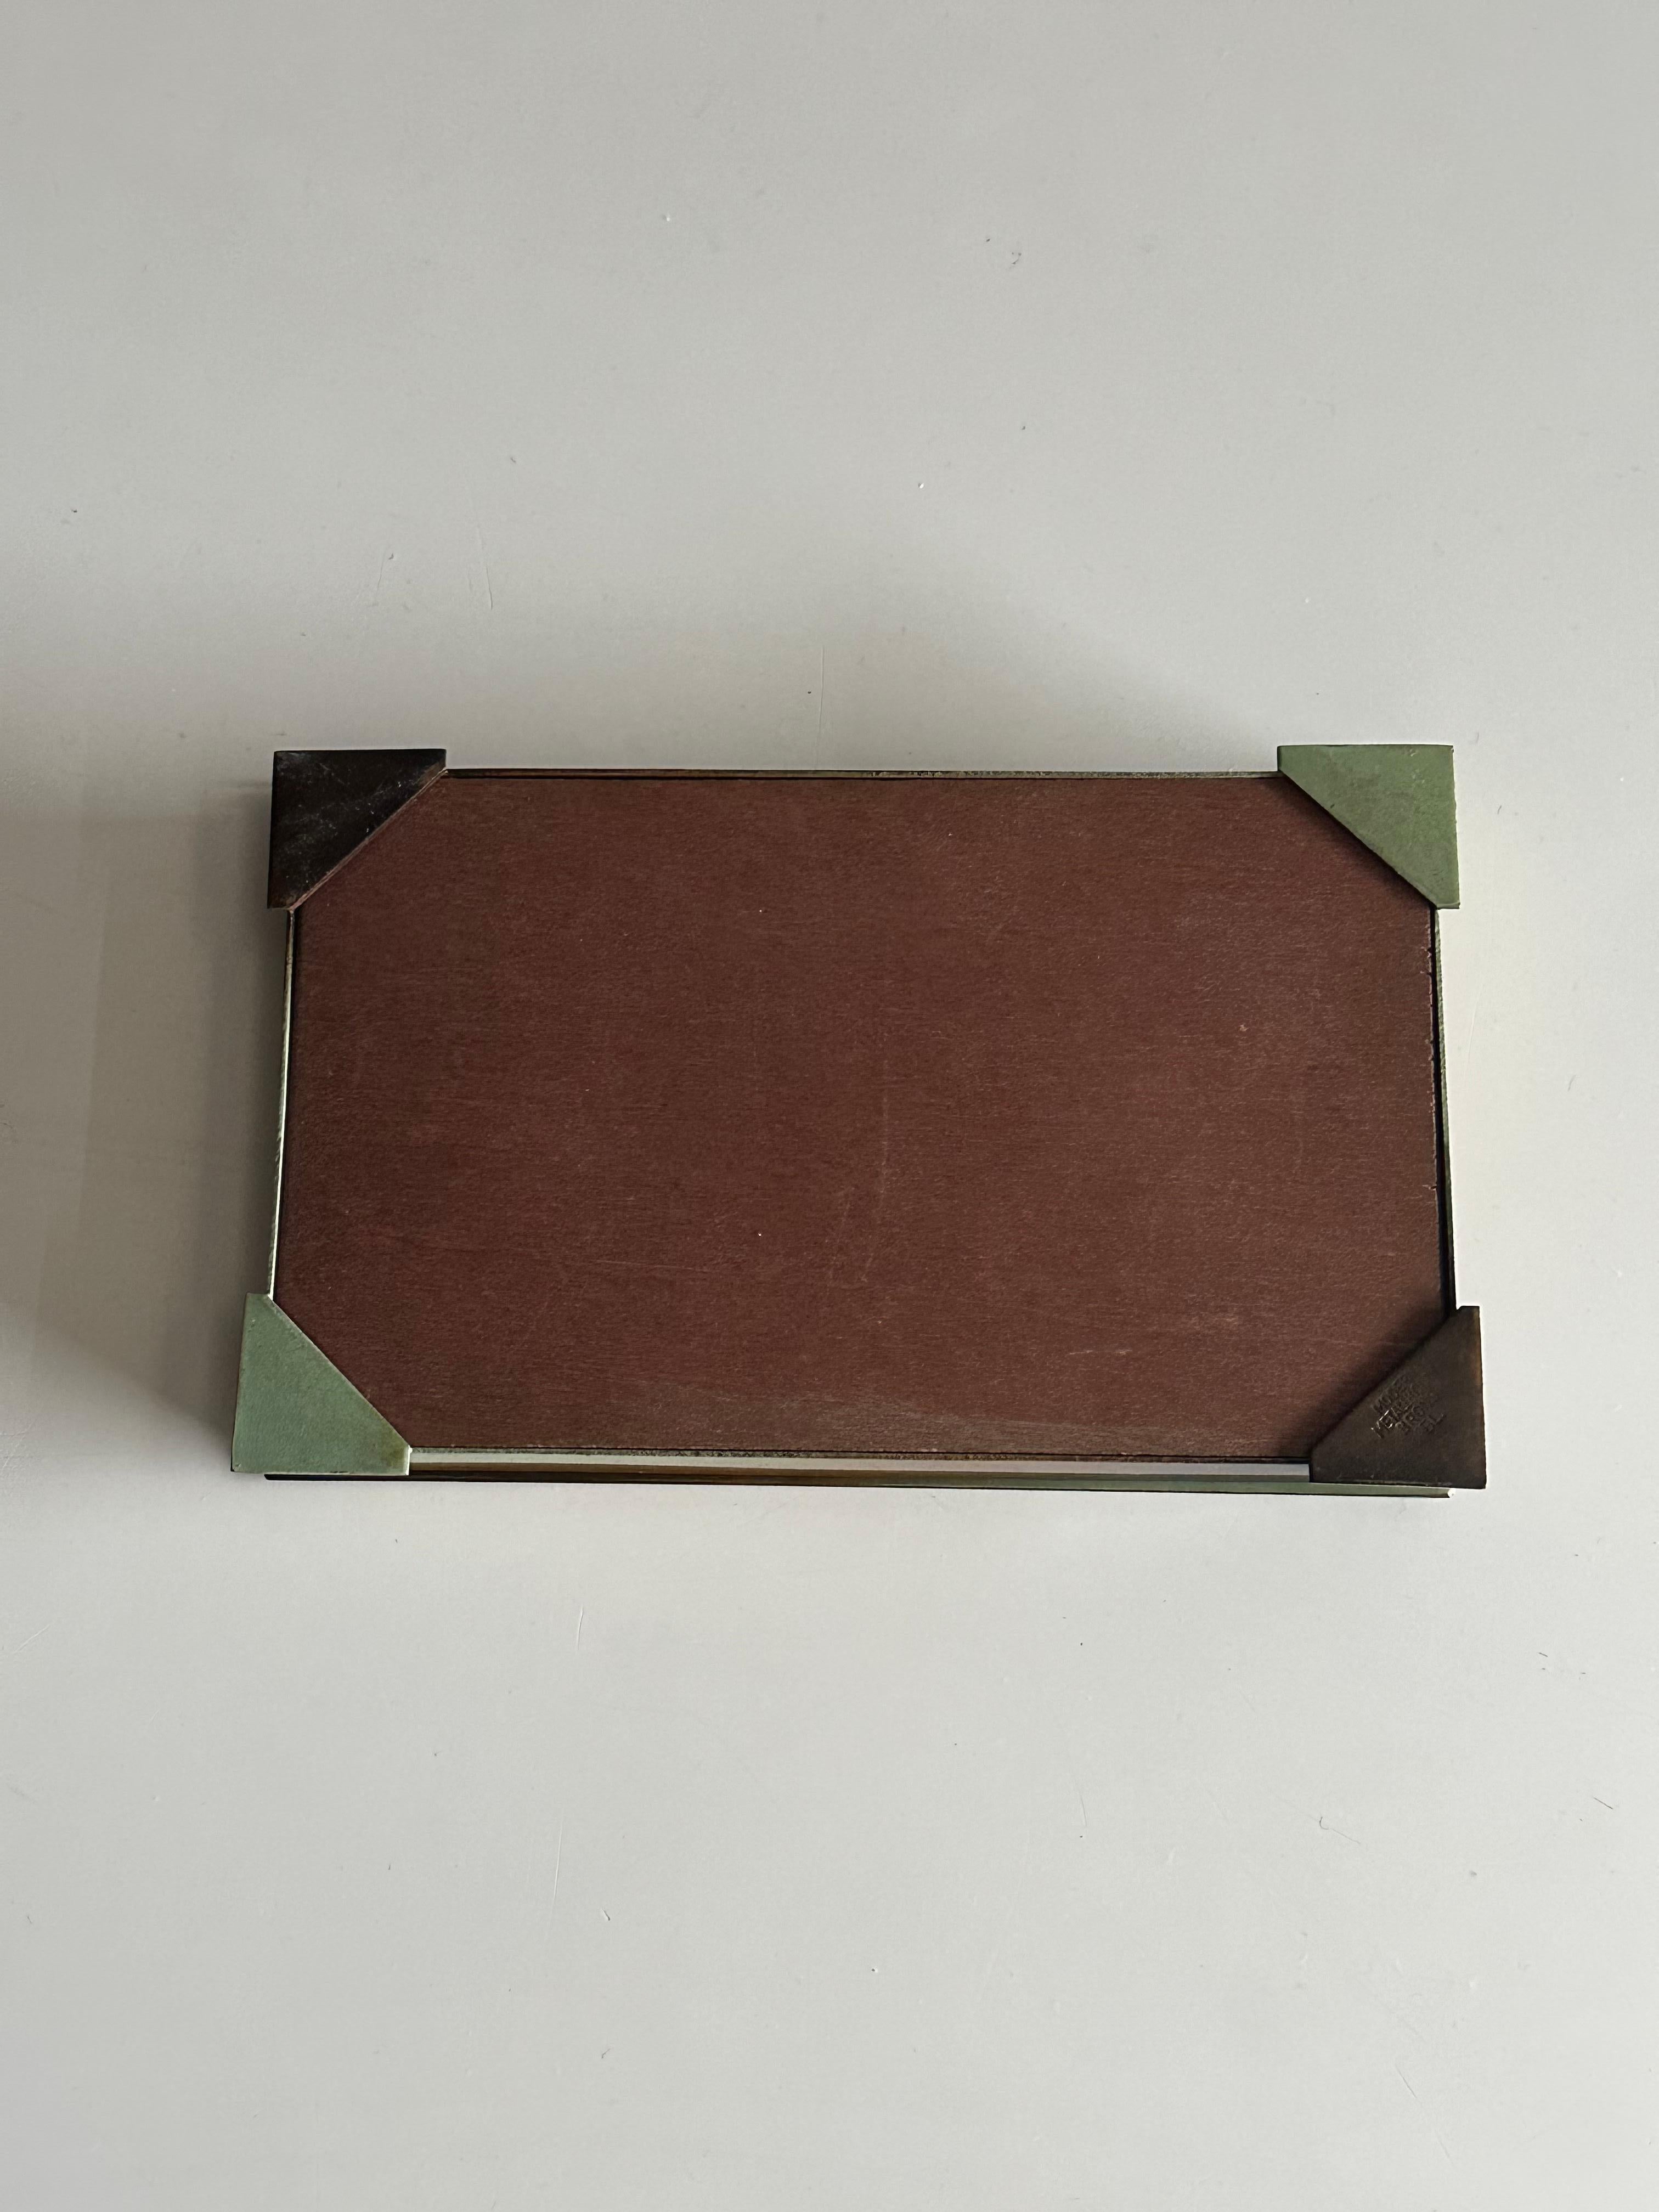 Swedish Lidded Box in Bronze & Wood by Bernhard Linder for Metallkonst 1950’s For Sale 2